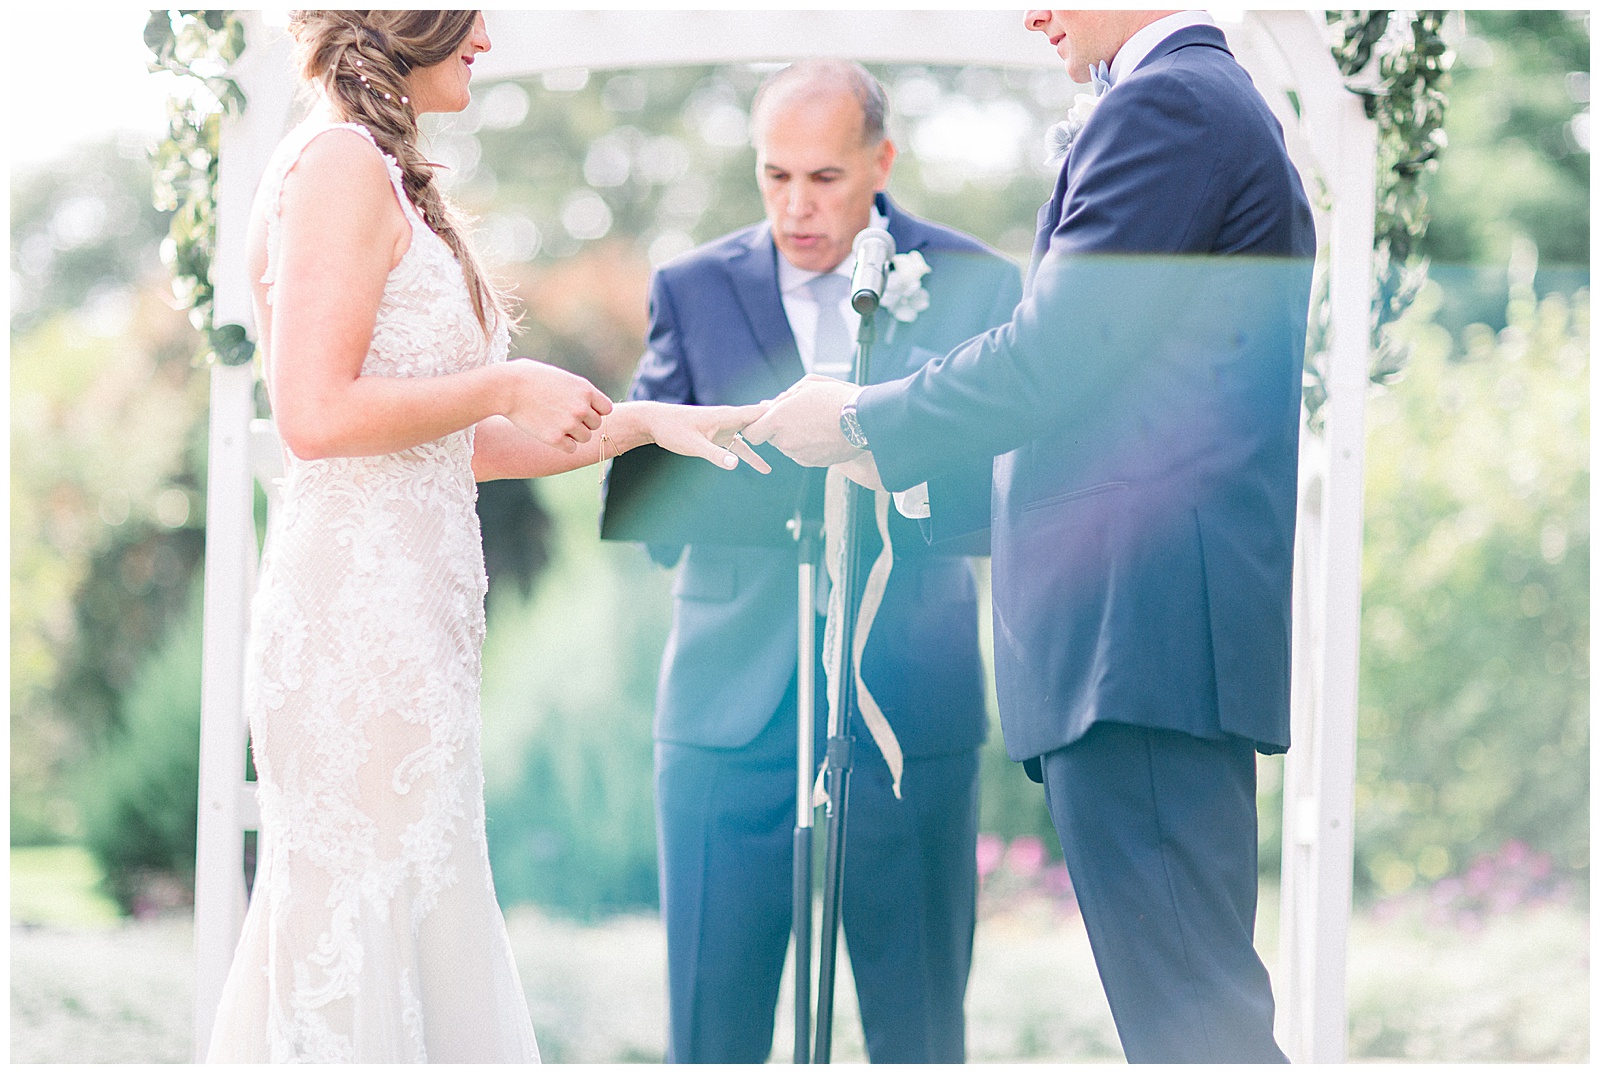 ring exchange at wedding ceremony